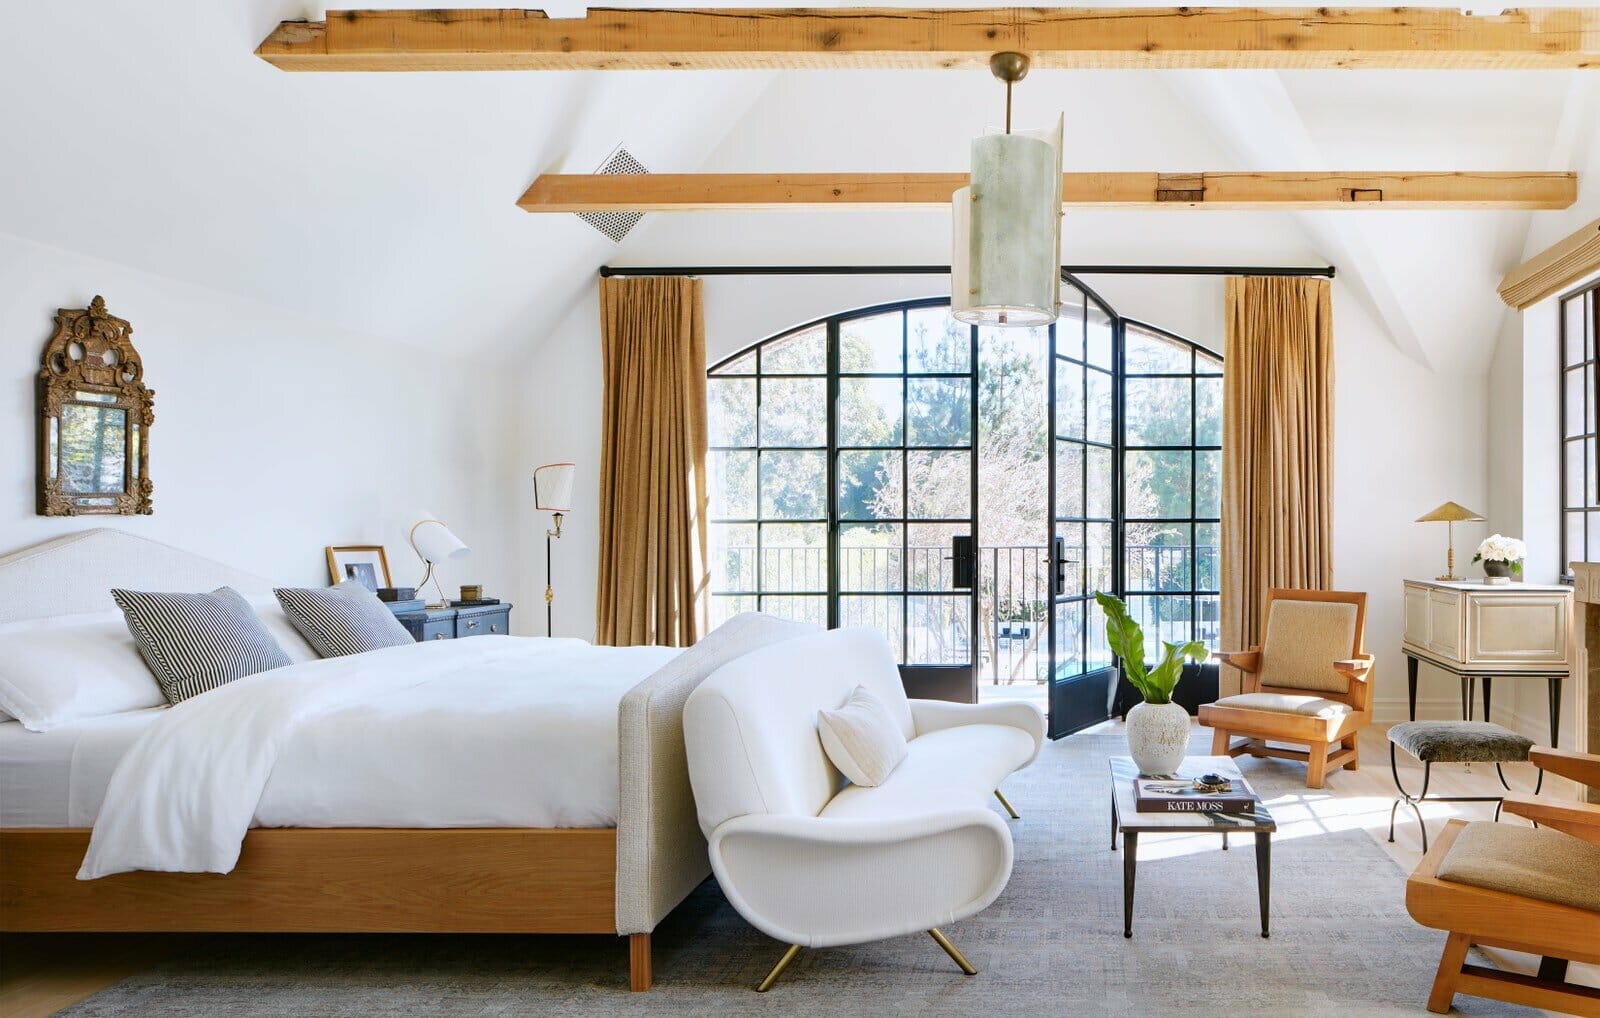 18 Master Bedroom Design Ideas to Create an At-Home Escape - Decorilla